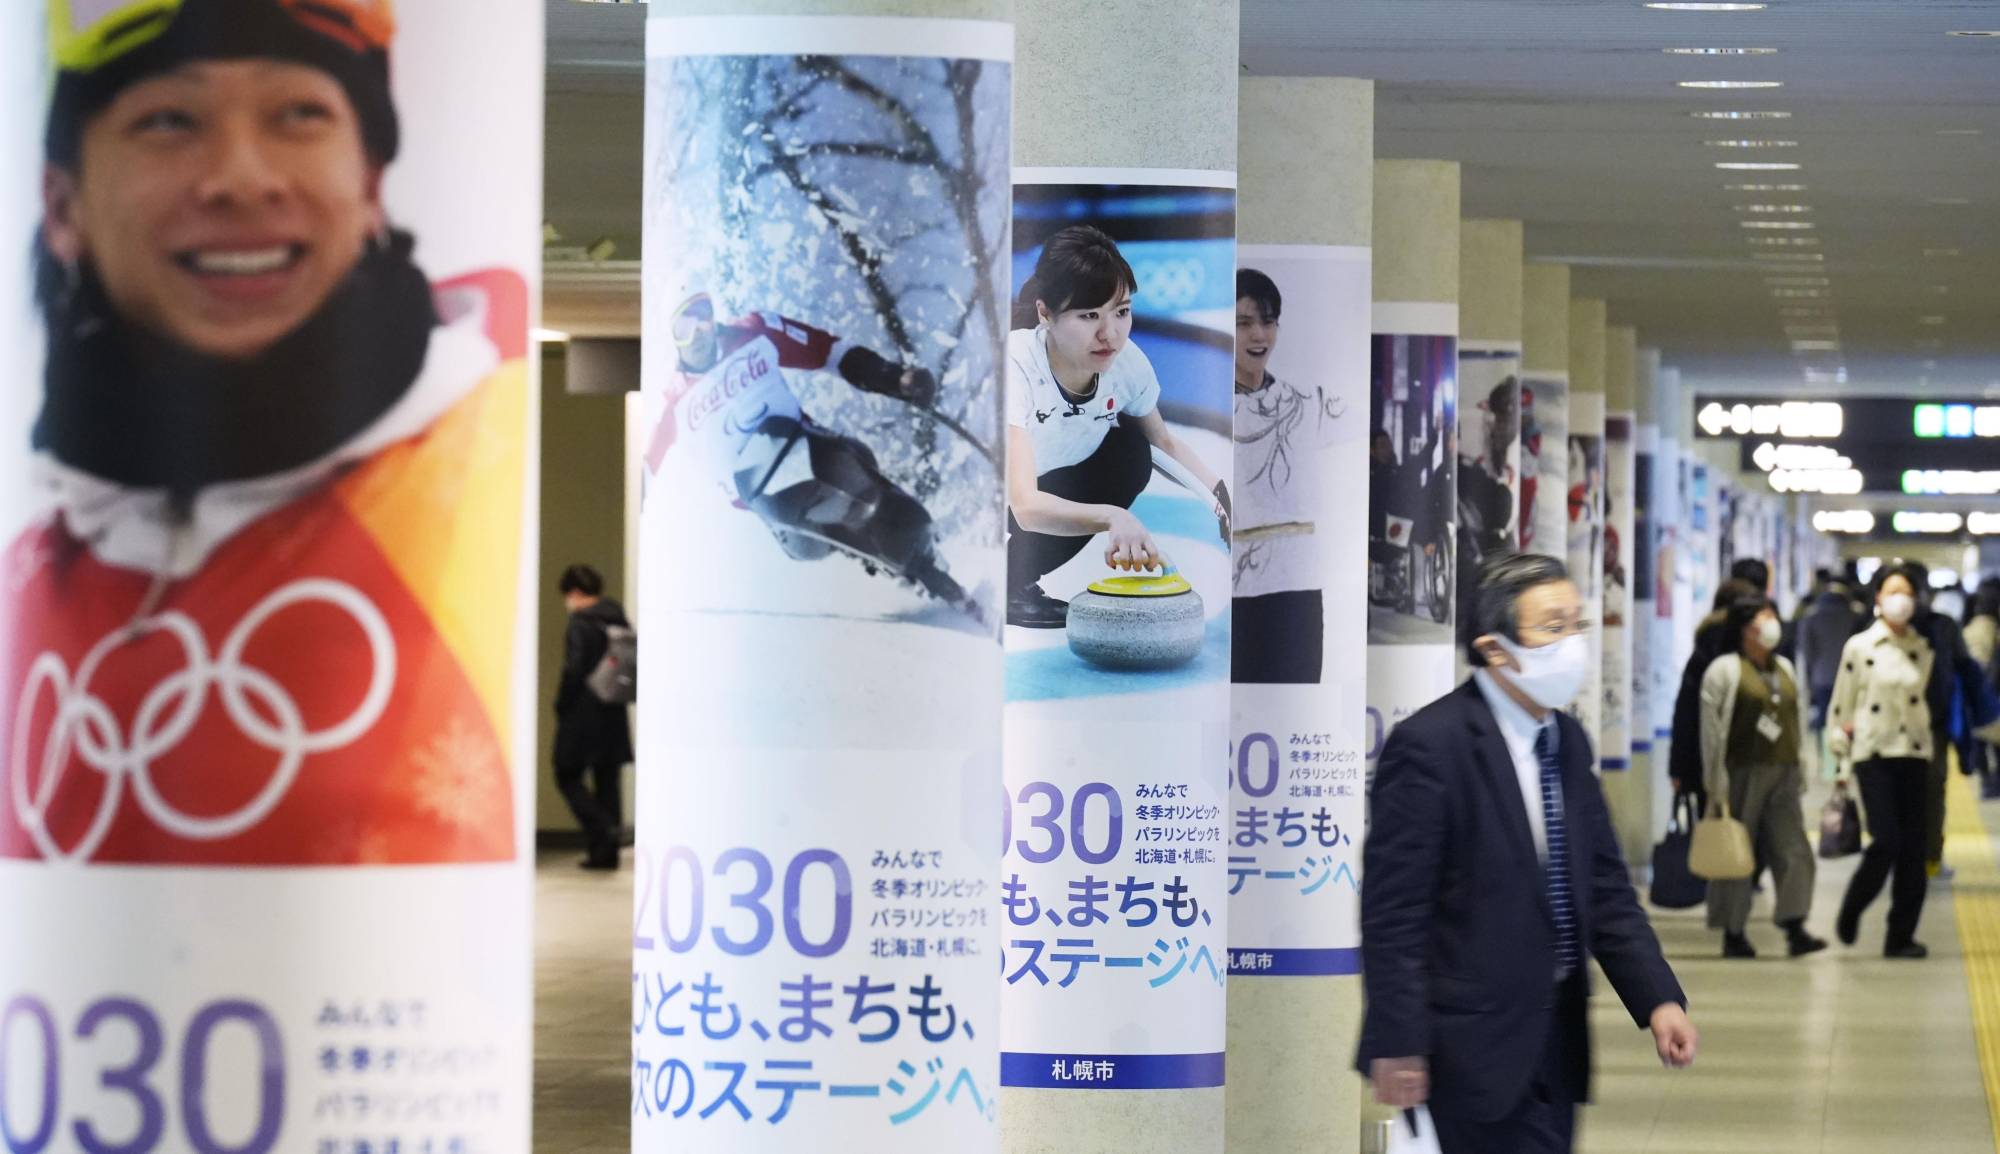 LVMH strikes Paris Olympics sponsorship deal - The Japan Times